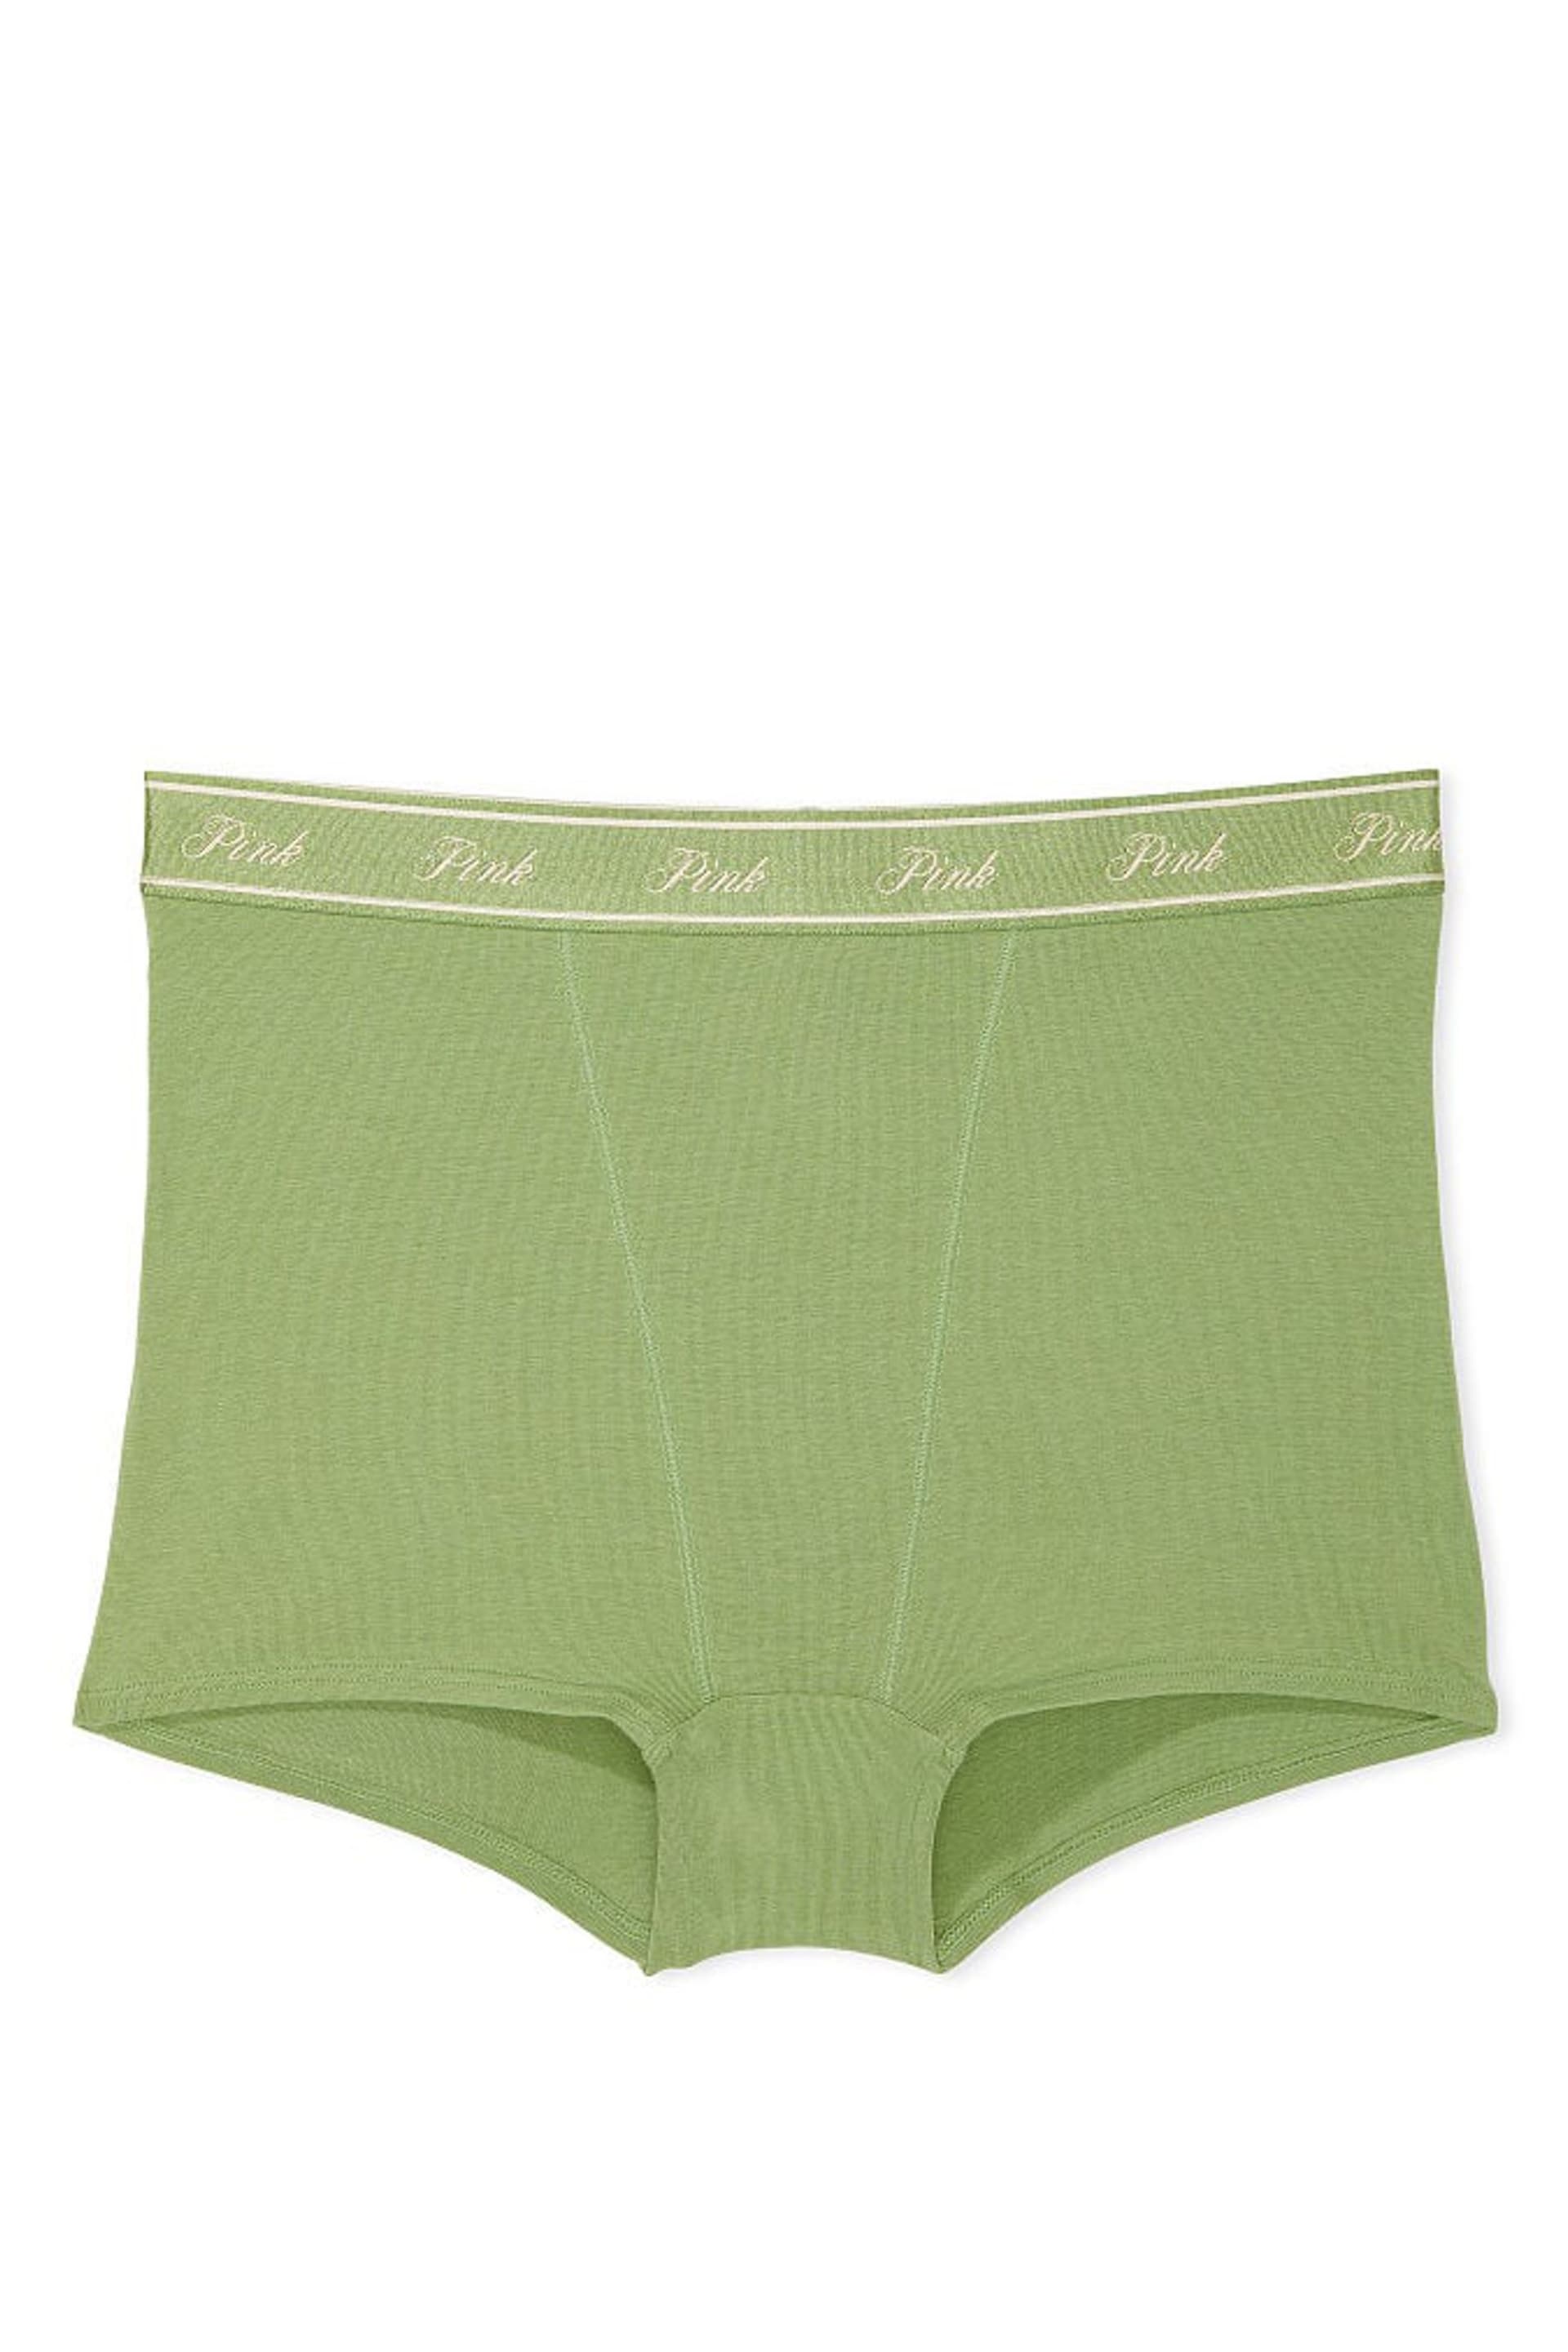 Victoria's Secret PINK Wild Grass Green Cotton Logo High Waist Boyshort Knickers - Image 3 of 3